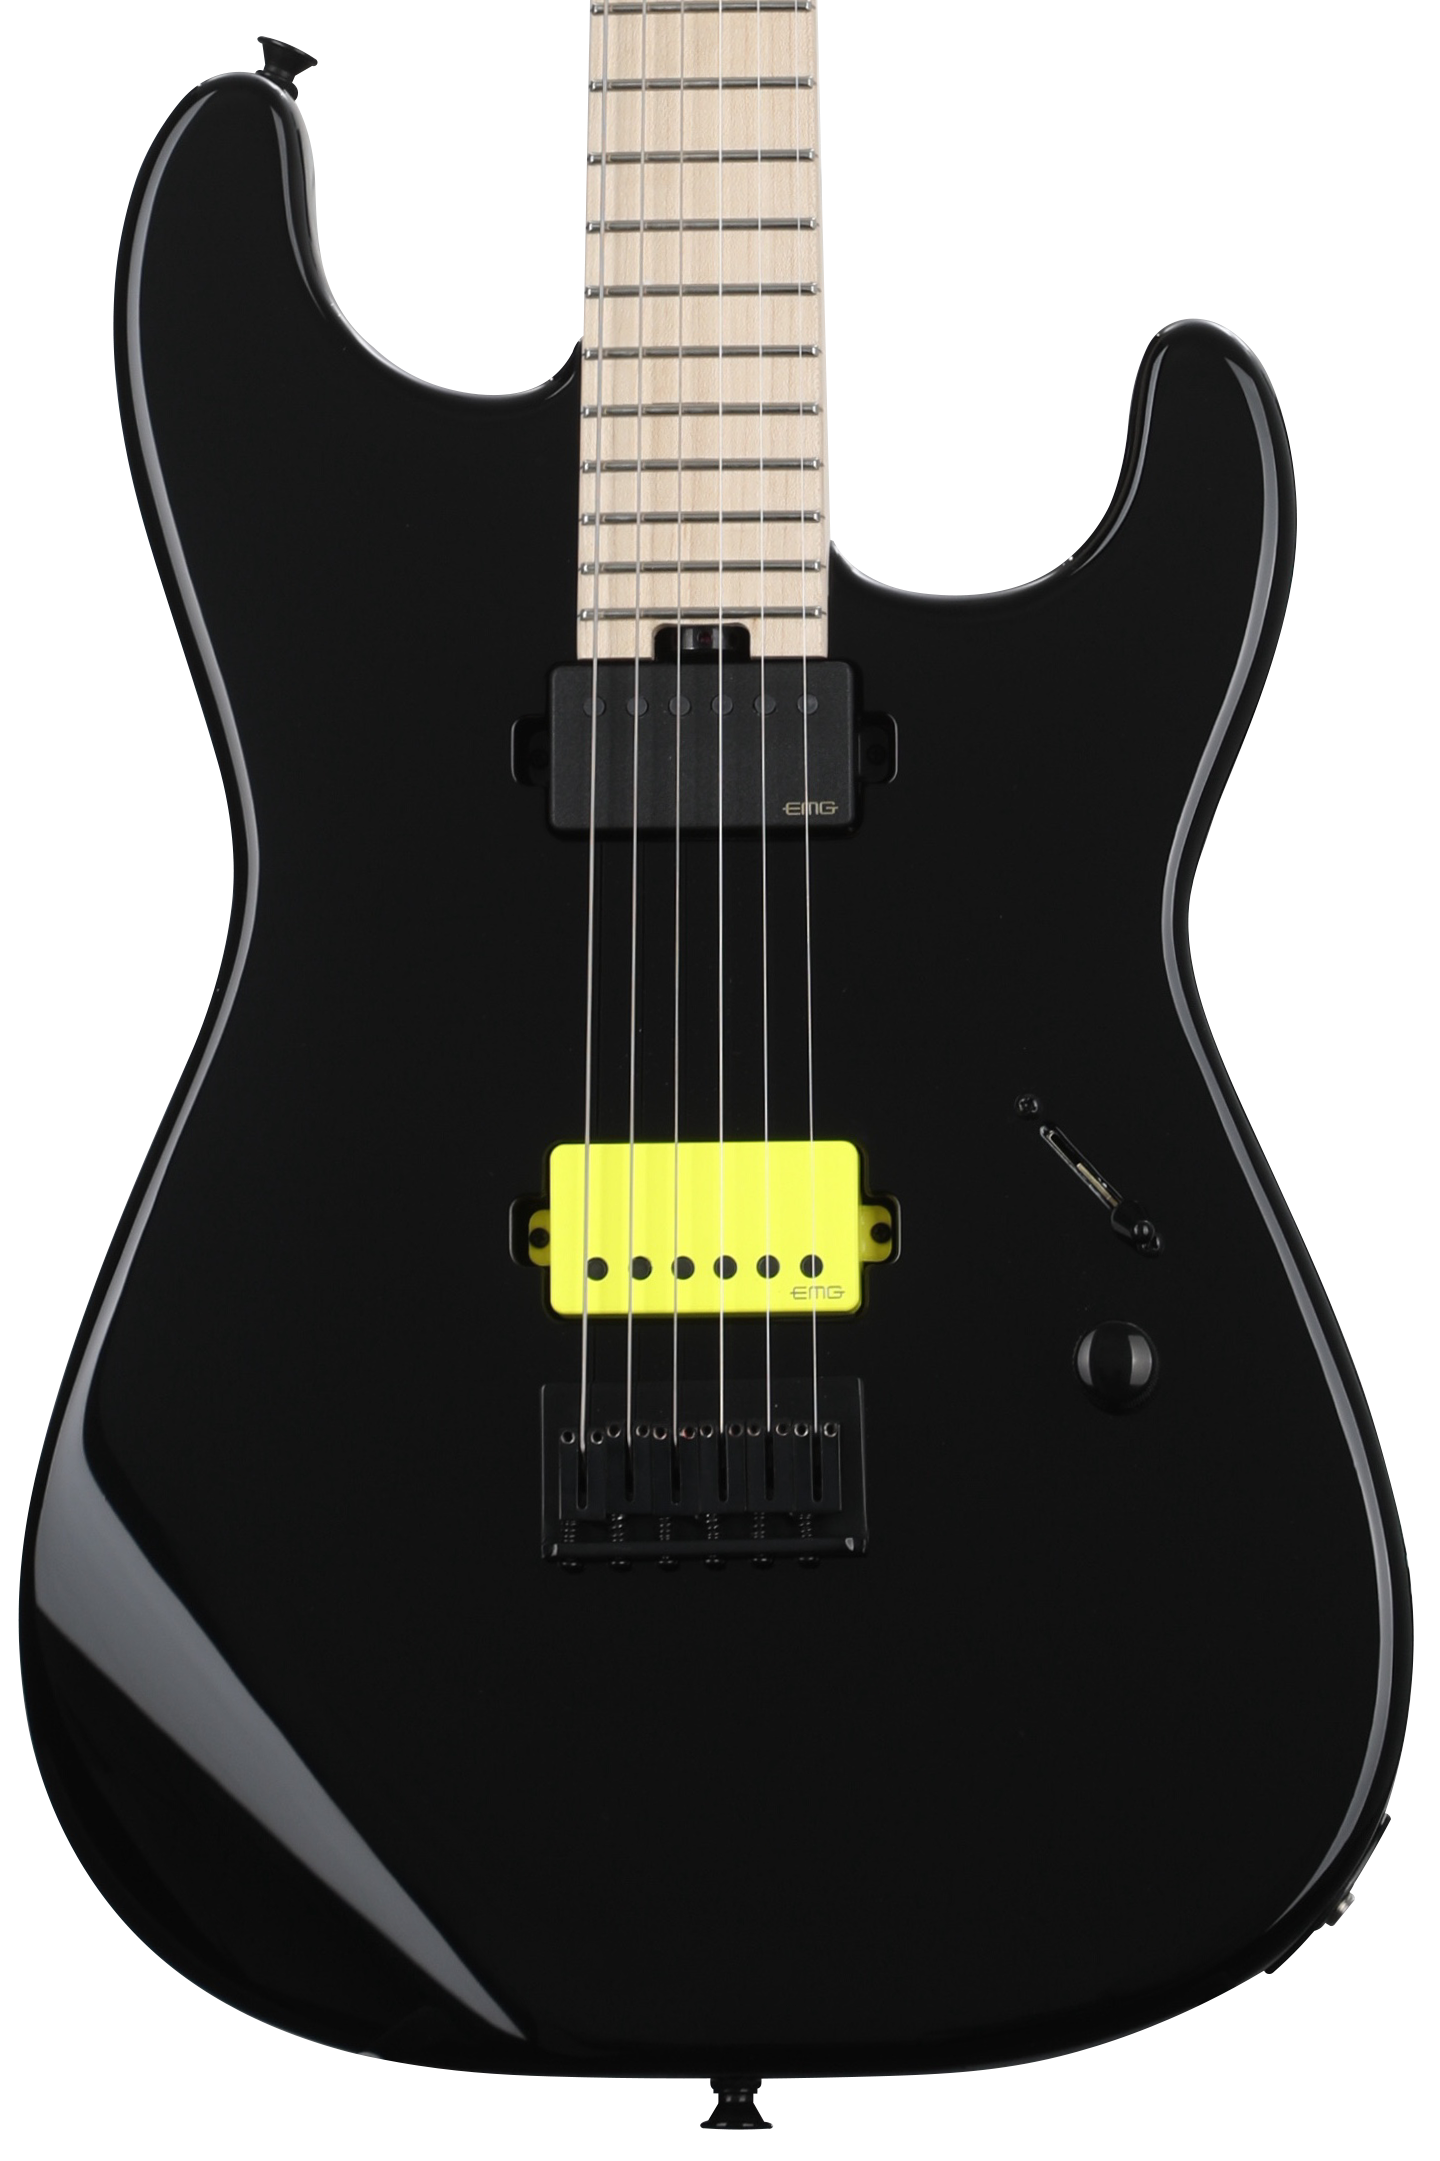 Charvel San Dimas Style 1 Sean Long Signature Electric Guitar - Black